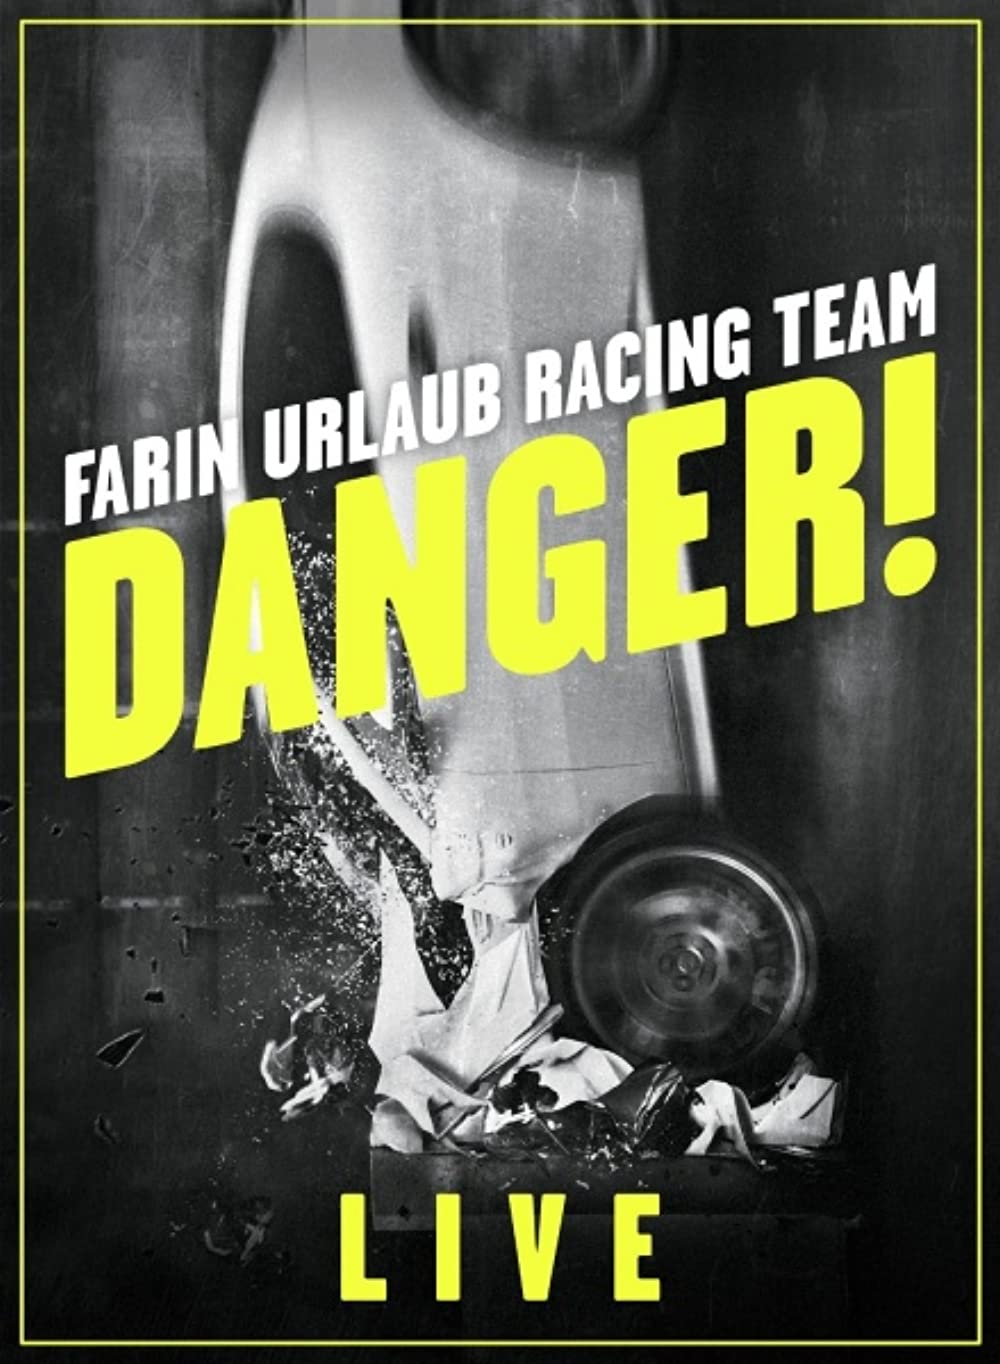 Farin Urlaub Racing Team Wallpapers